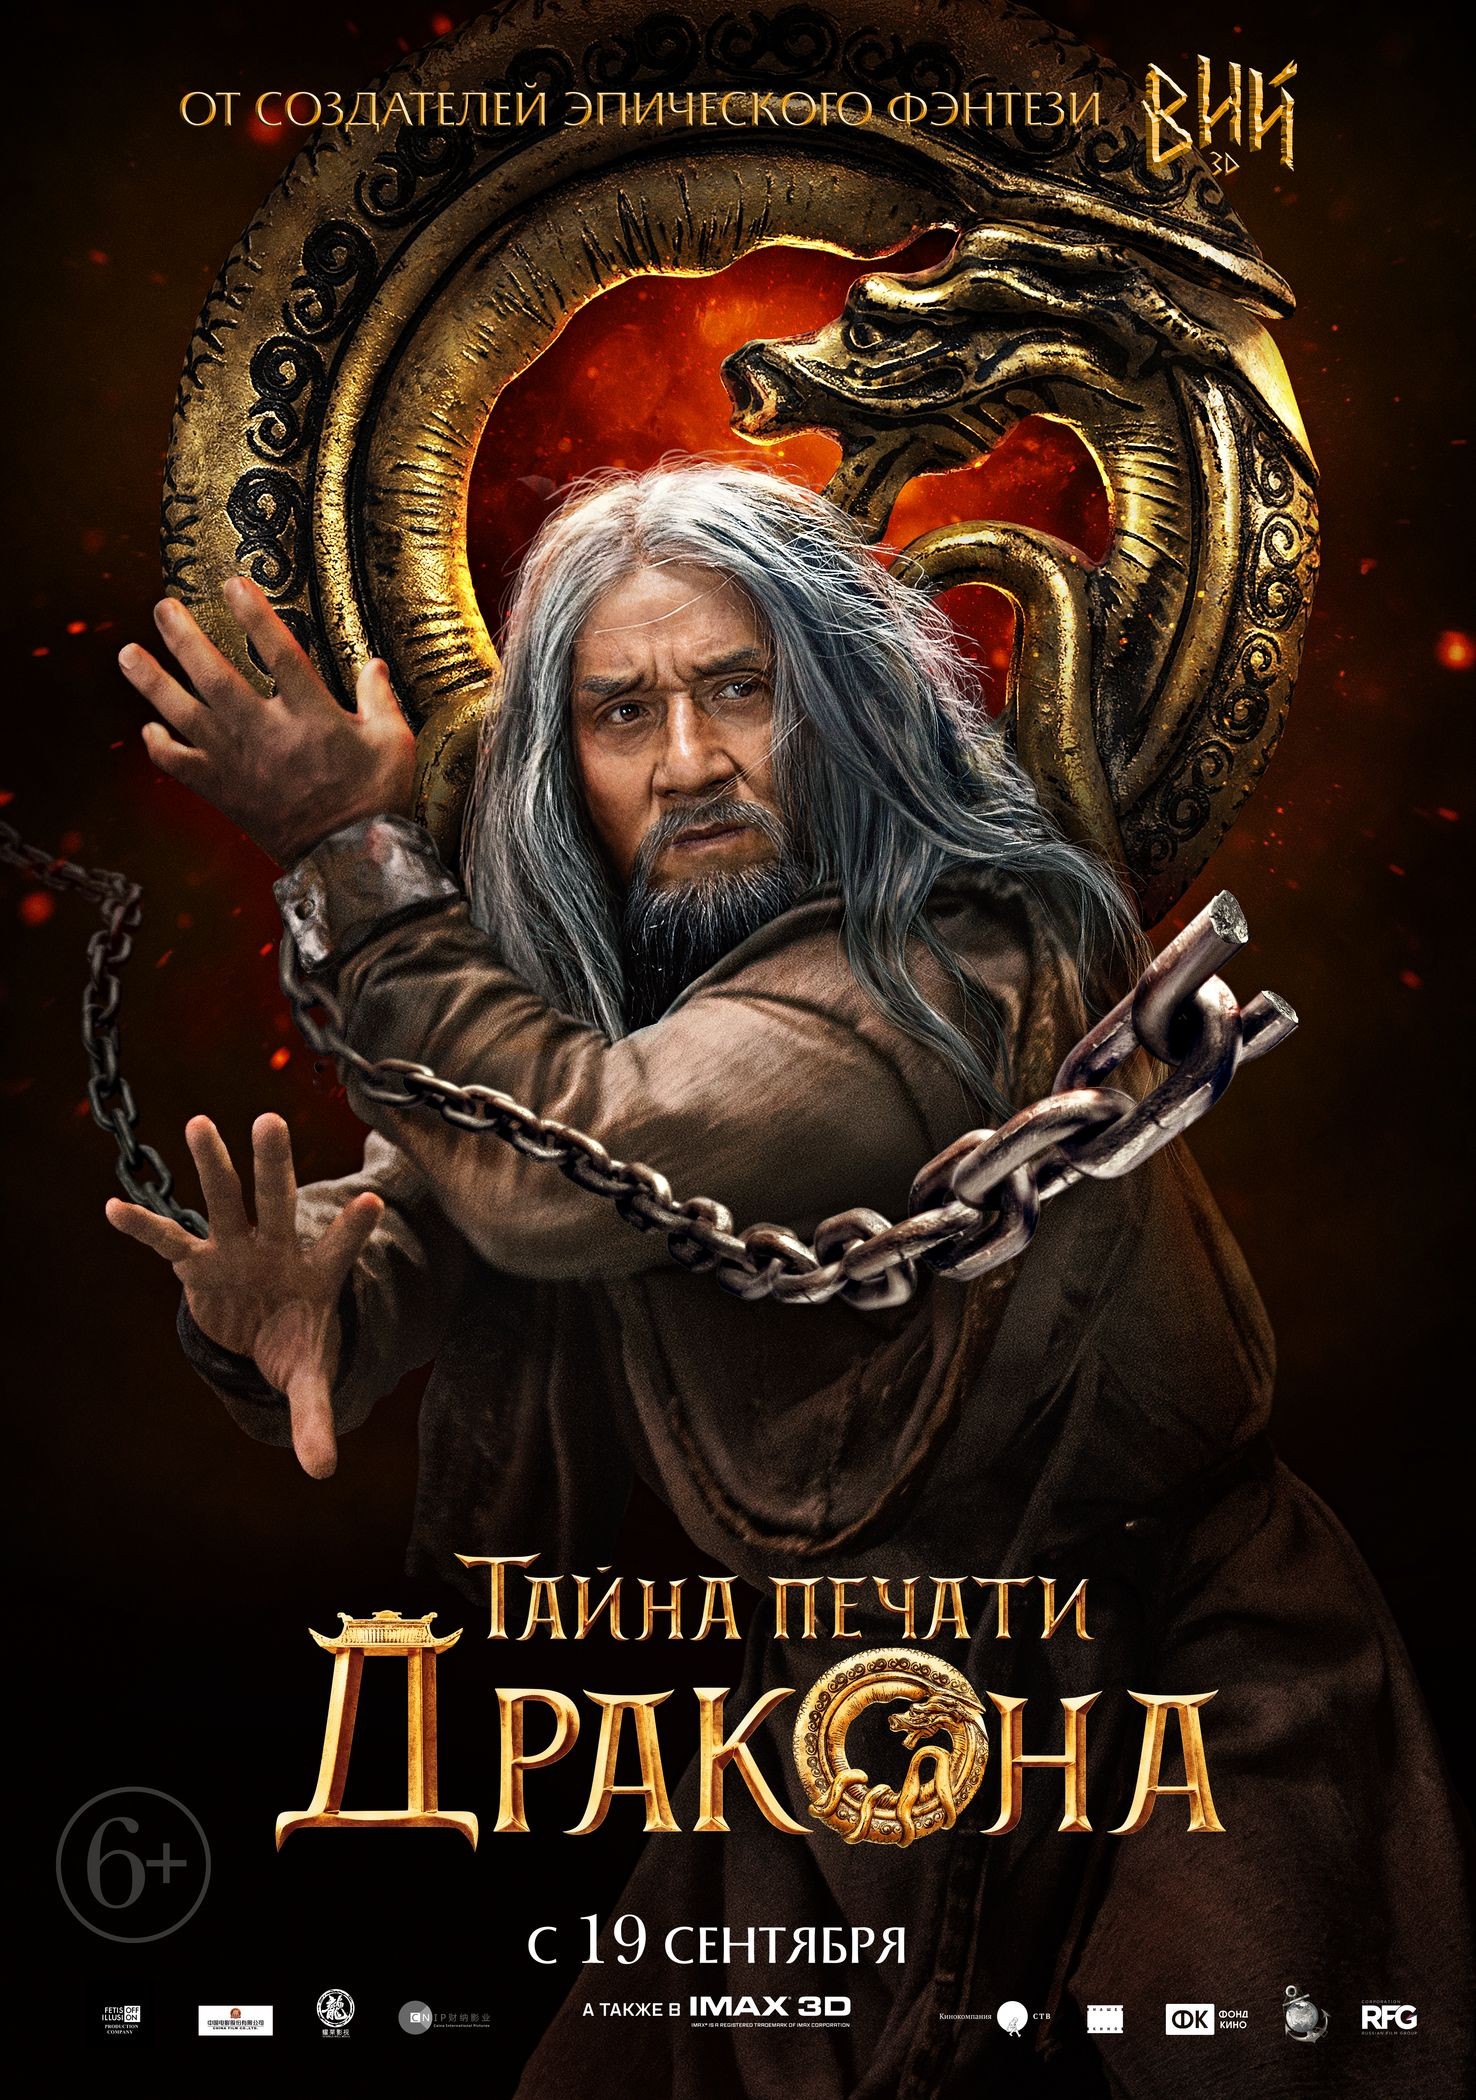 Тайна печати дракона: постер N160301